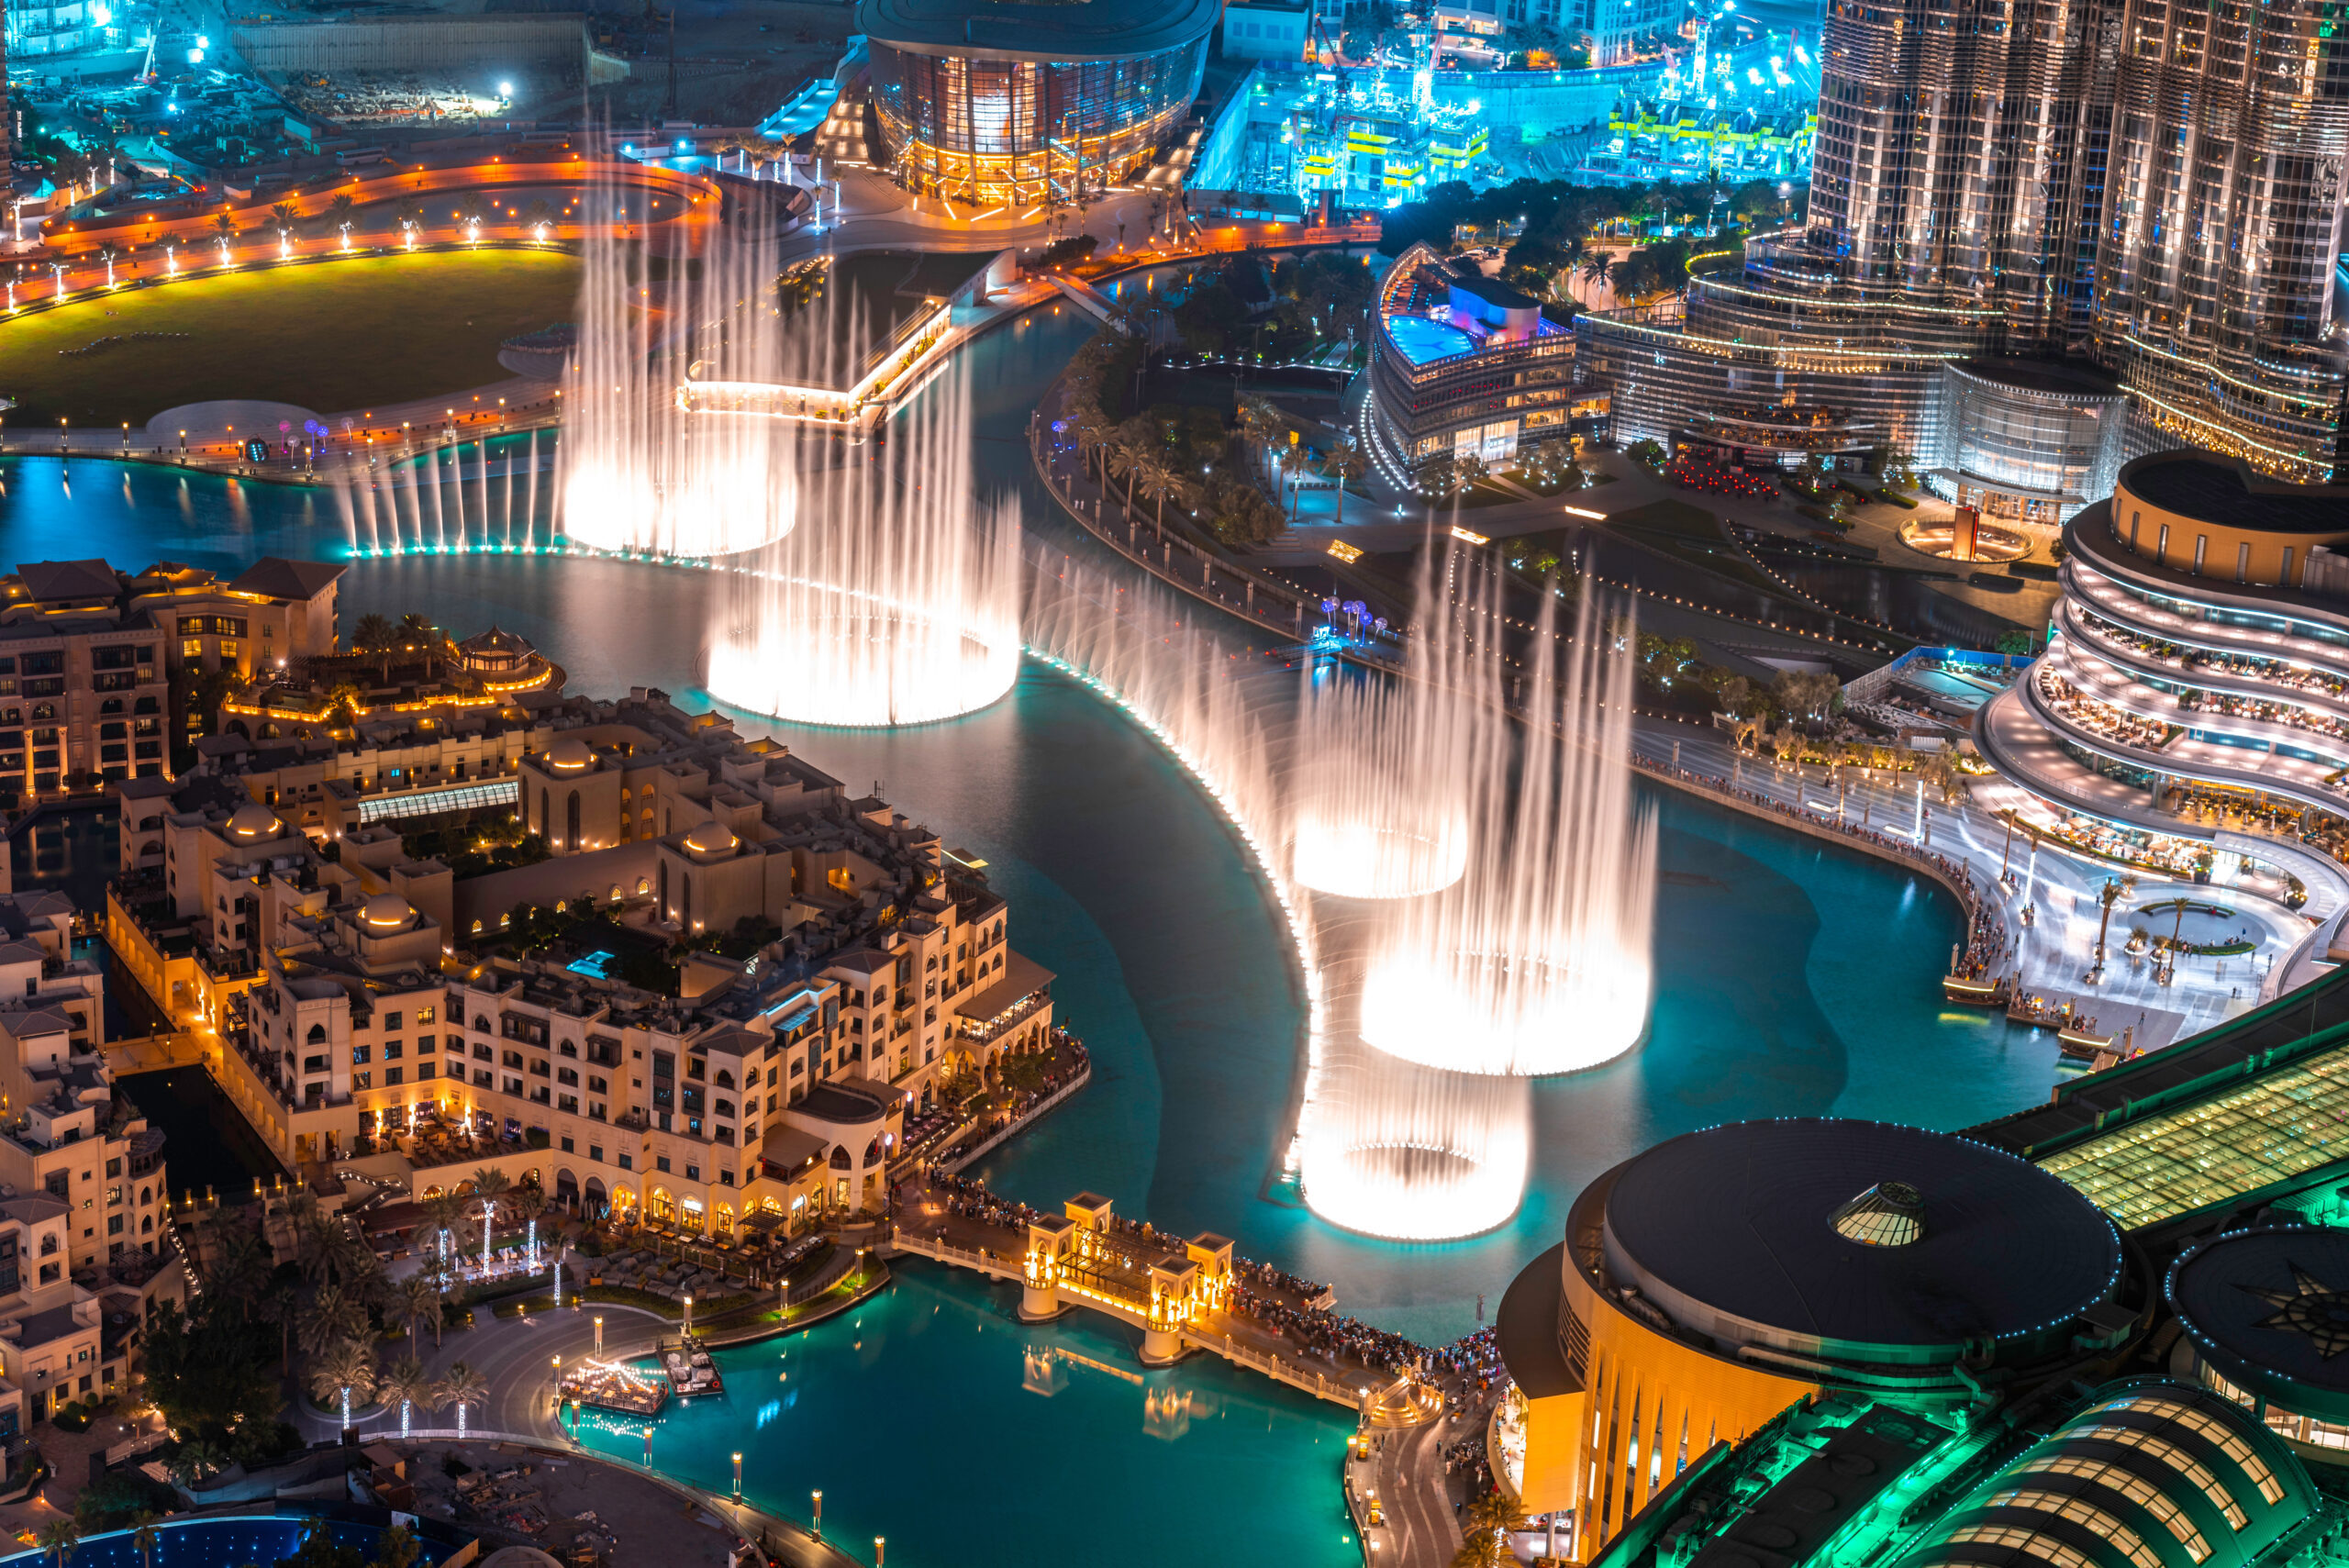 The Dubai Mall - Dubai Fountain